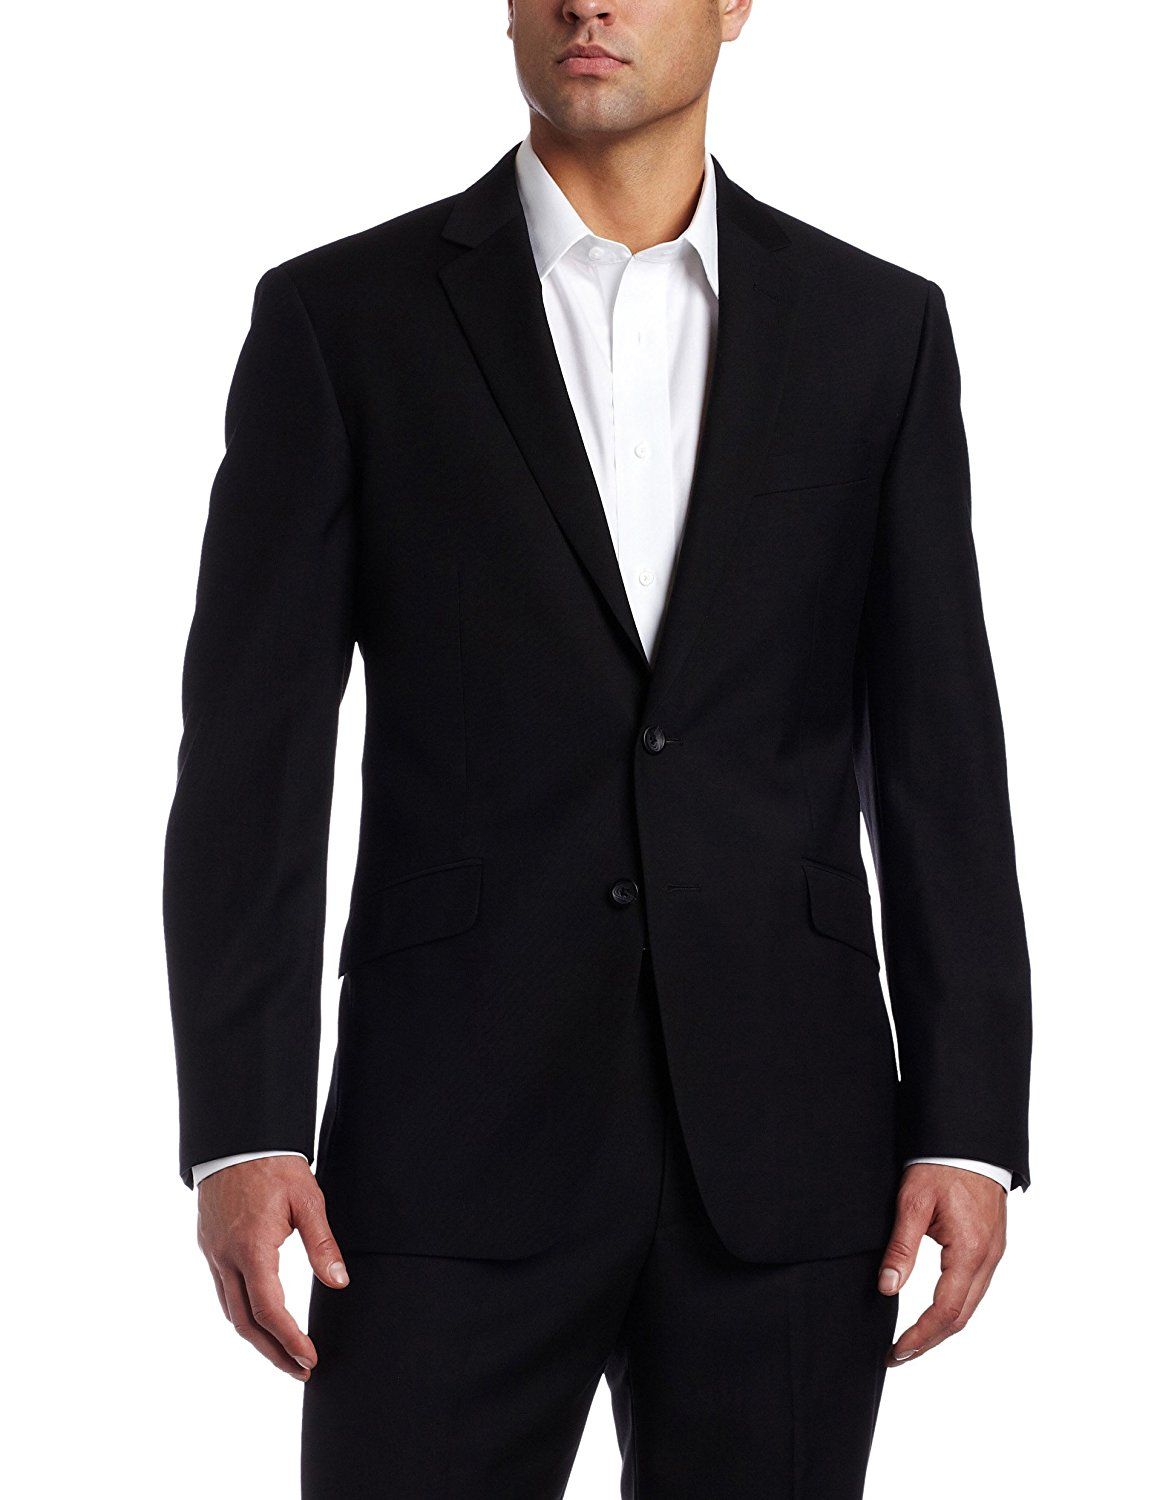 Kenneth Cole REACTION Men's Slim Fit Suit Separate